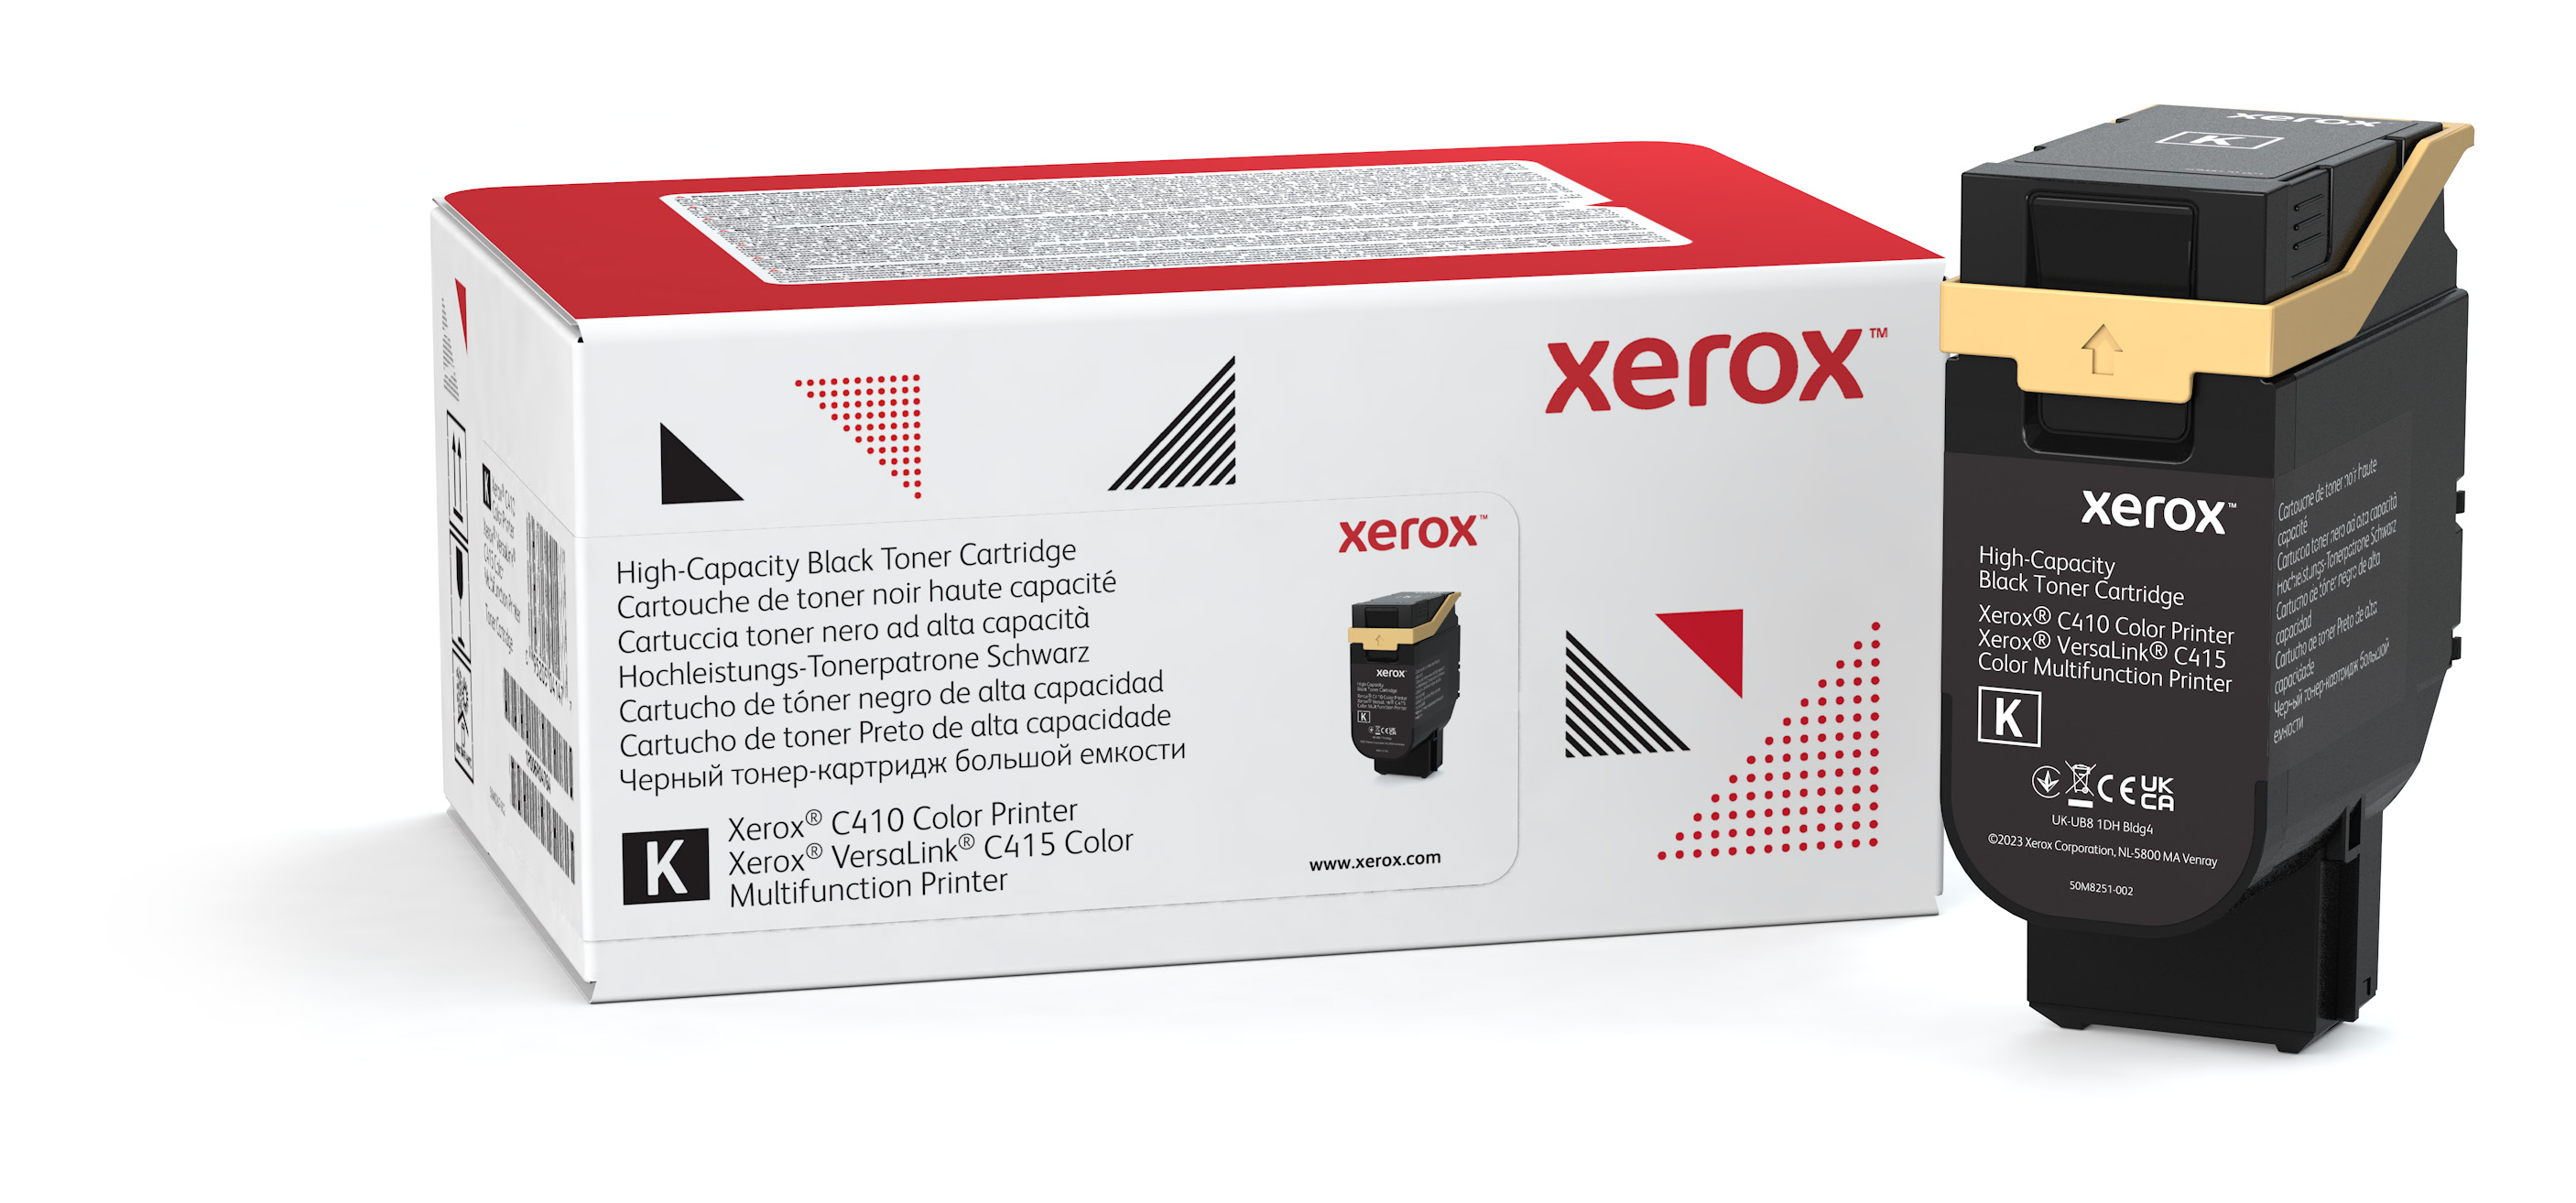 Genuine Xerox Black High Capacity Toner Cartridge For The Xerox C410/C415  (Use & Return) 006R04685 Genuine Xerox Supplies